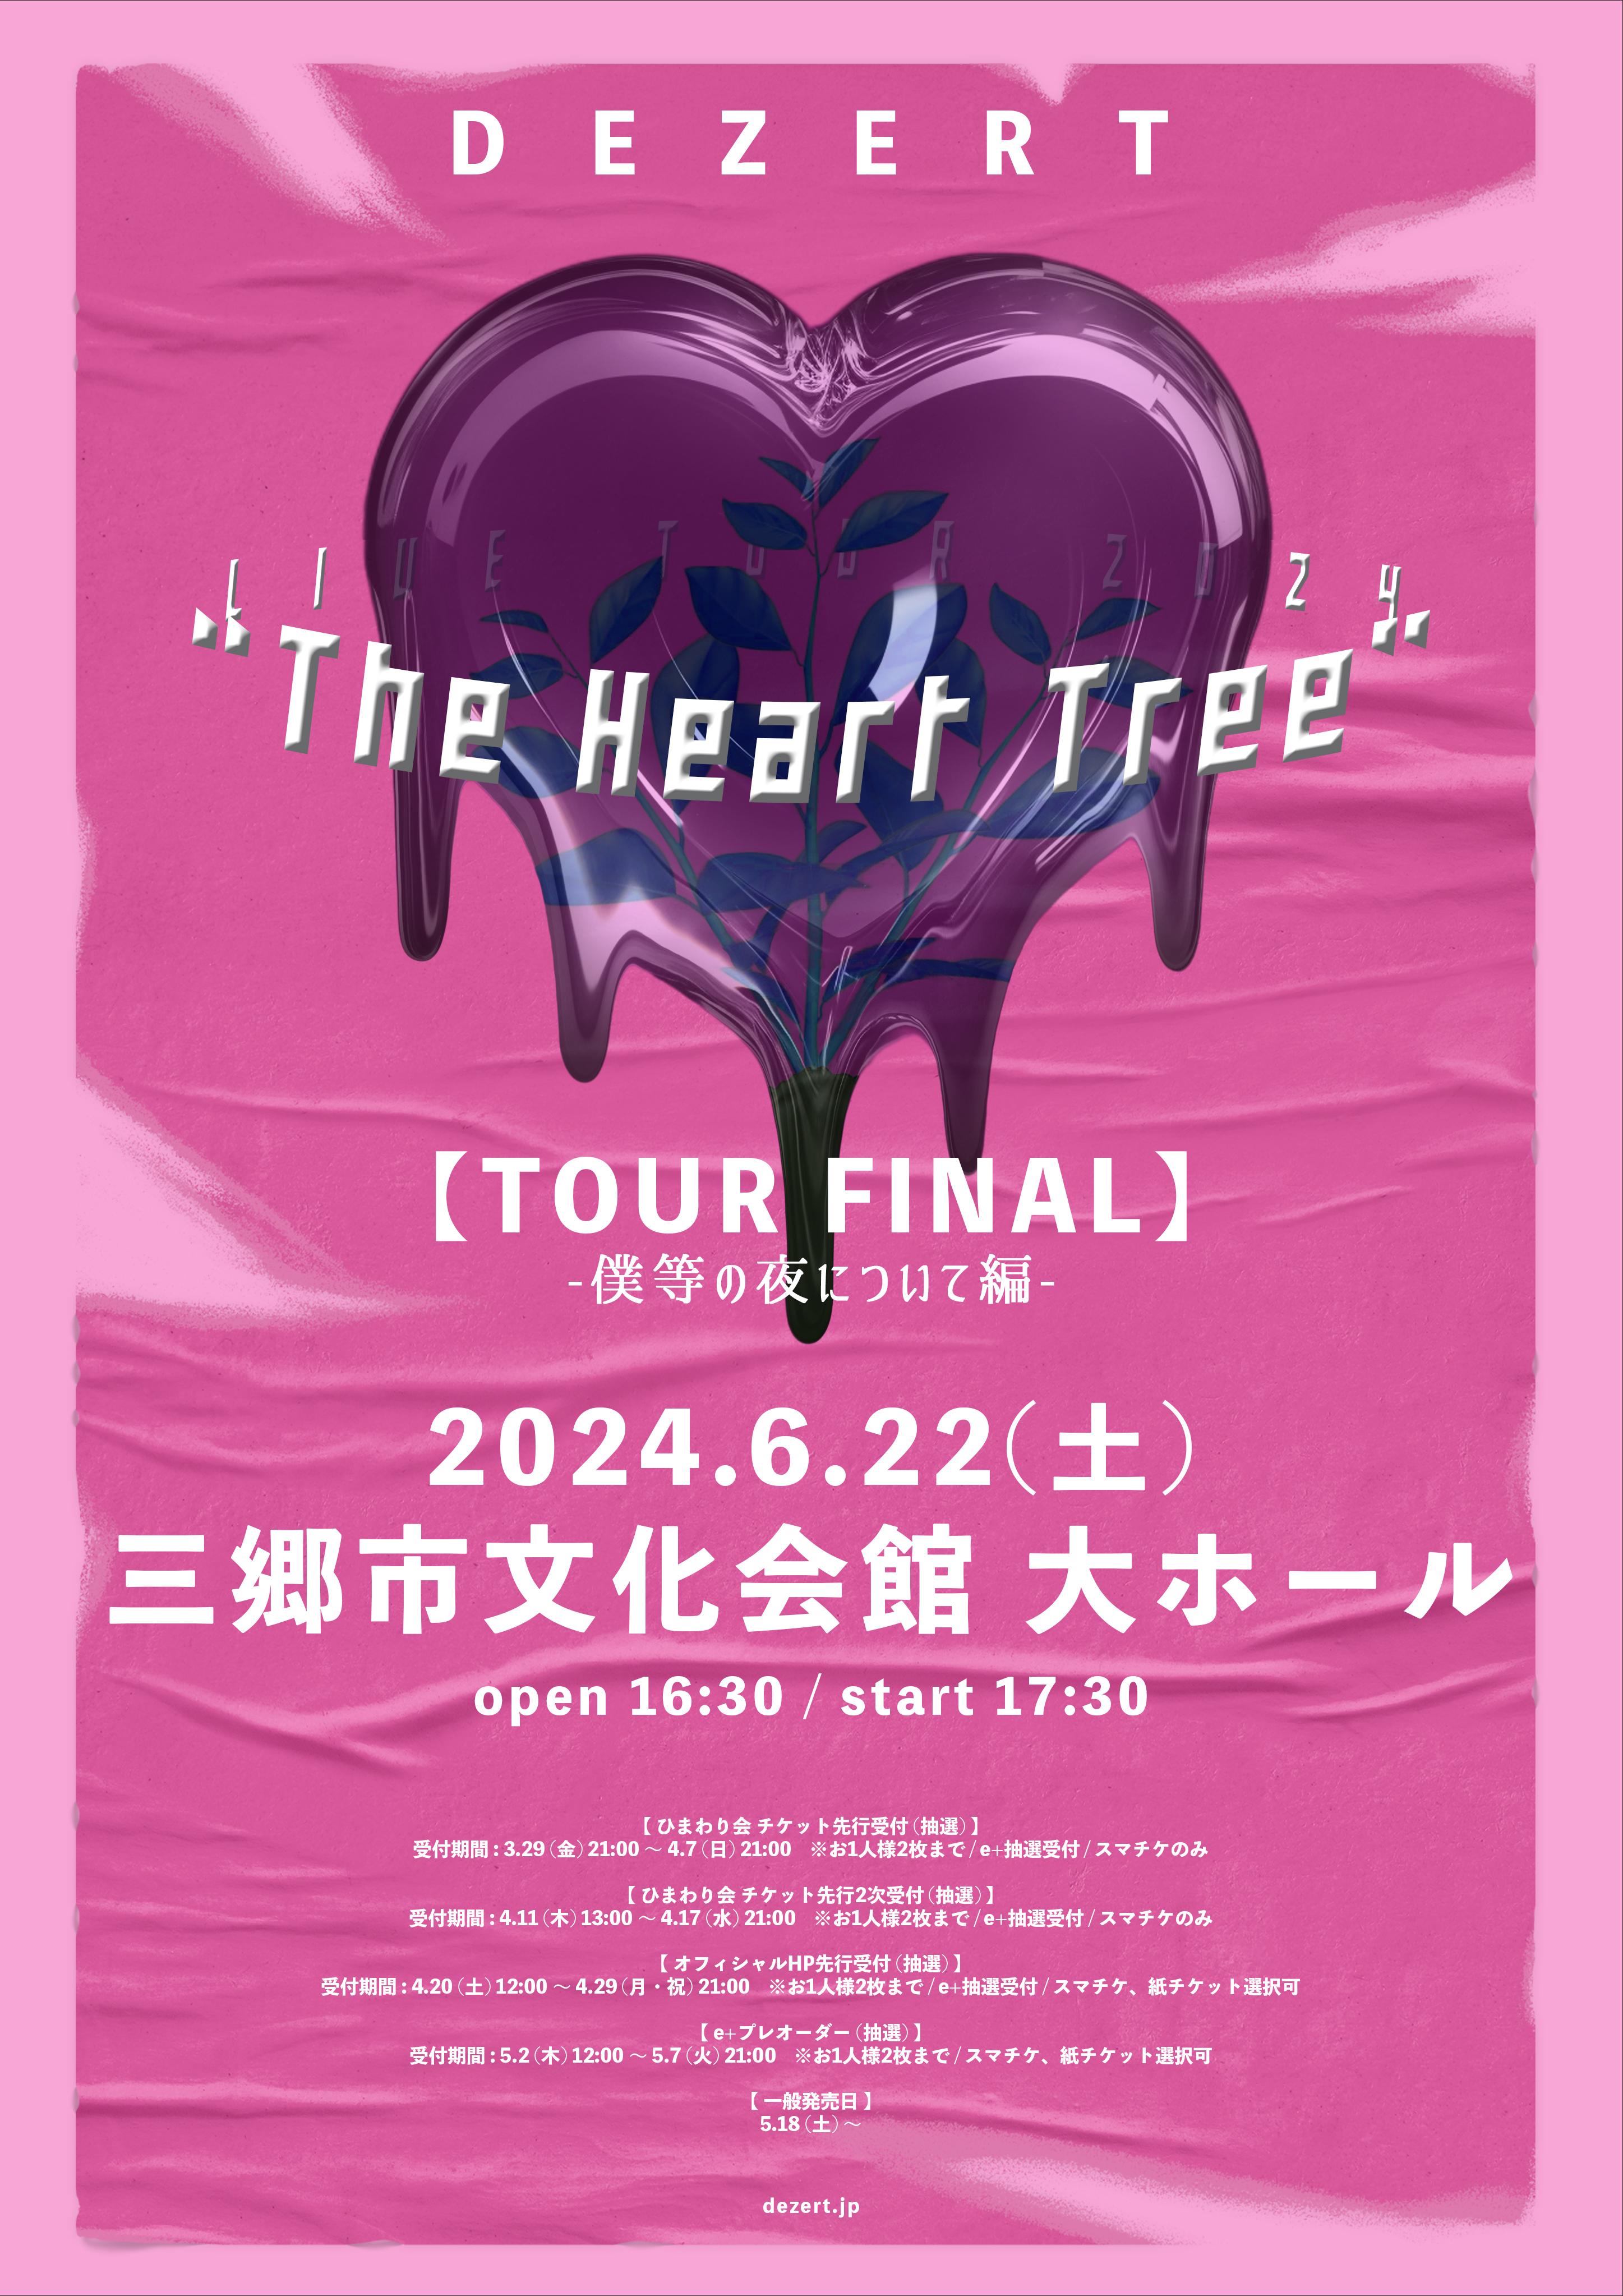 DEZERT LIVE TOUR 2024 “The Heart Tree” 【TOUR FINAL】 -僕等の夜について編-<br>一般チケット情報！